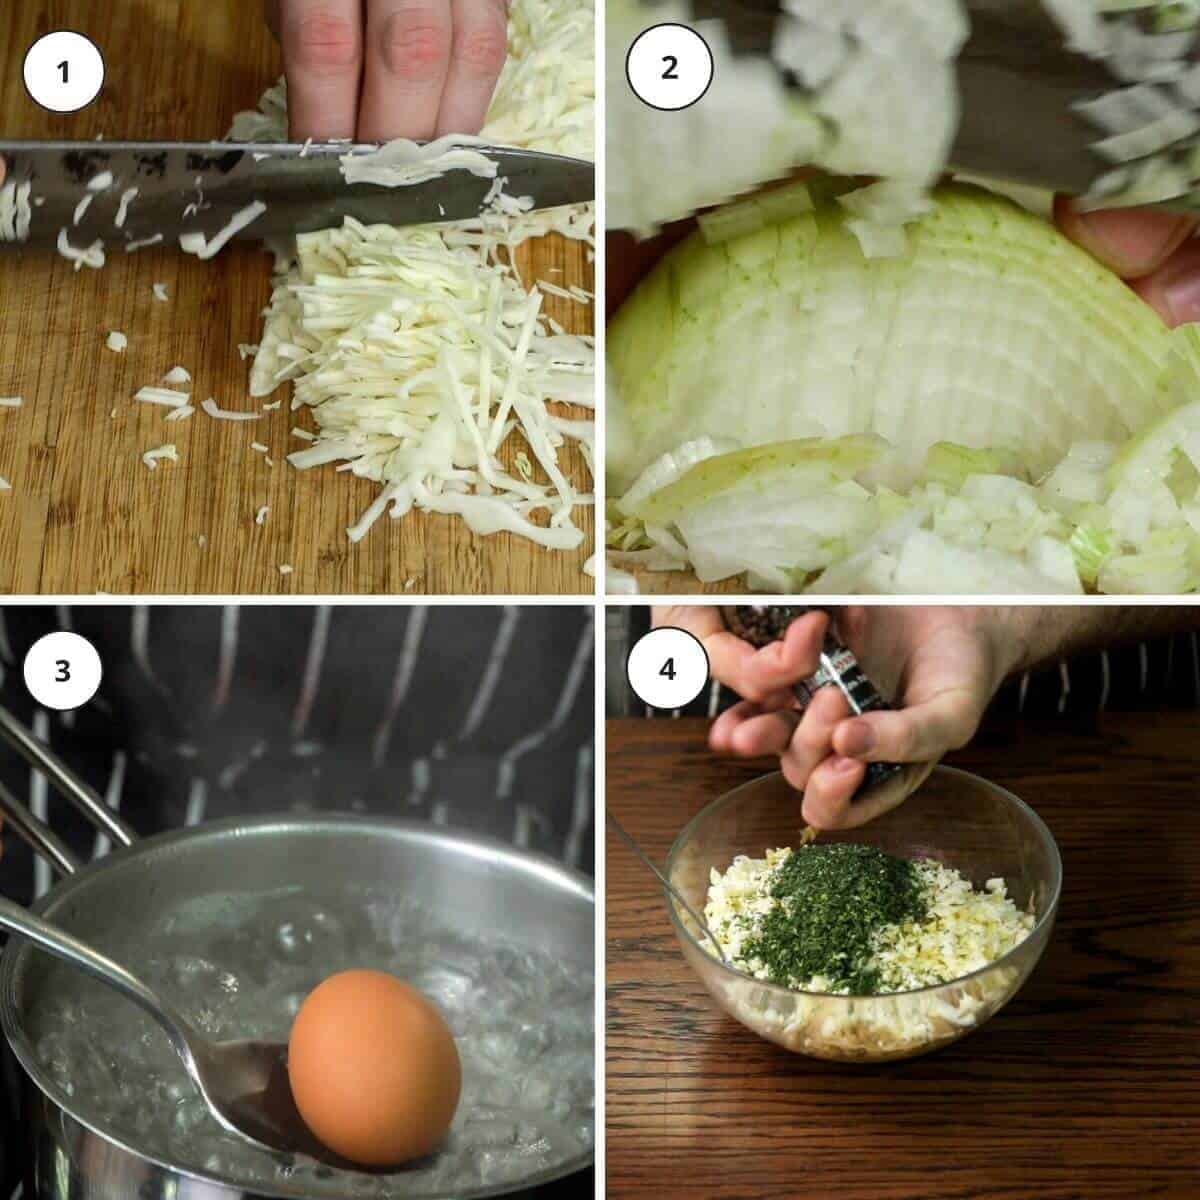 Picture steps for making cabbage piroshki filling.